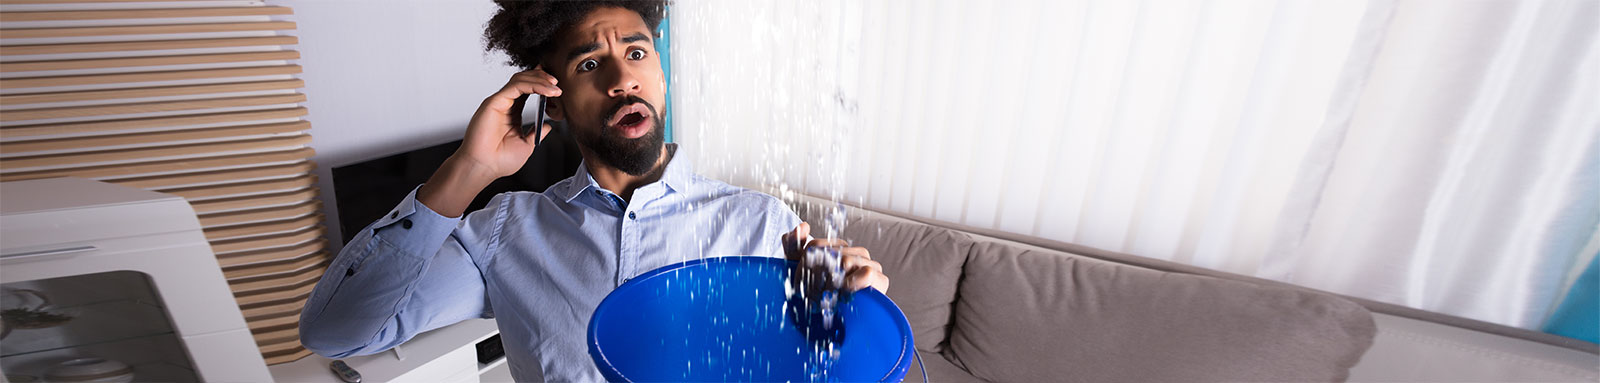 Man holding blue bucket under water leak in living room